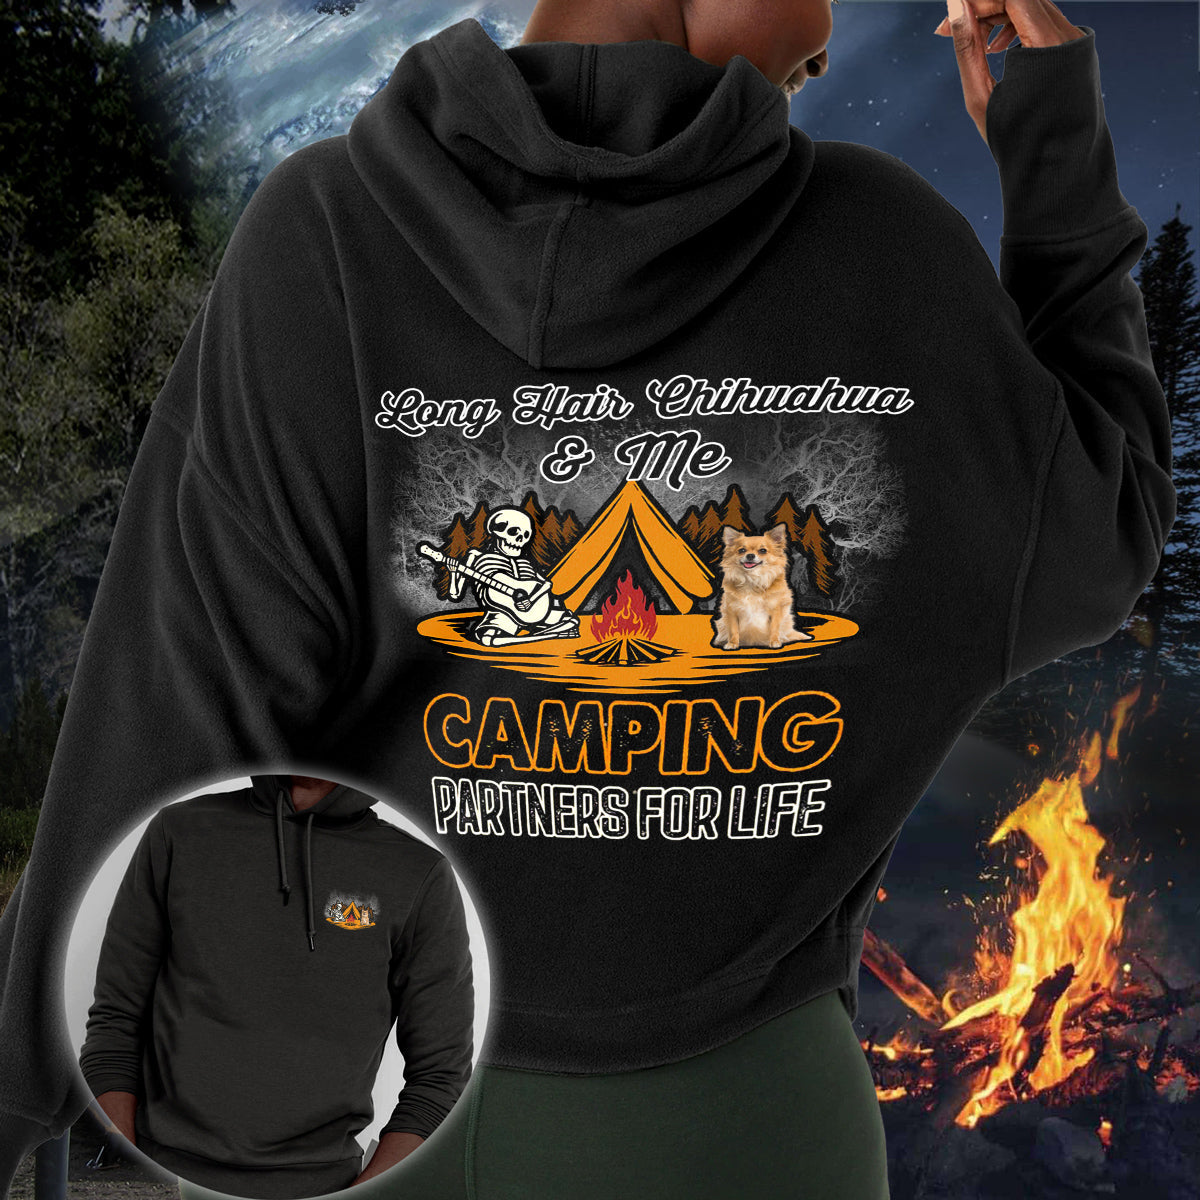 Long Hair Chihuahua Camping Partners-Hoodie